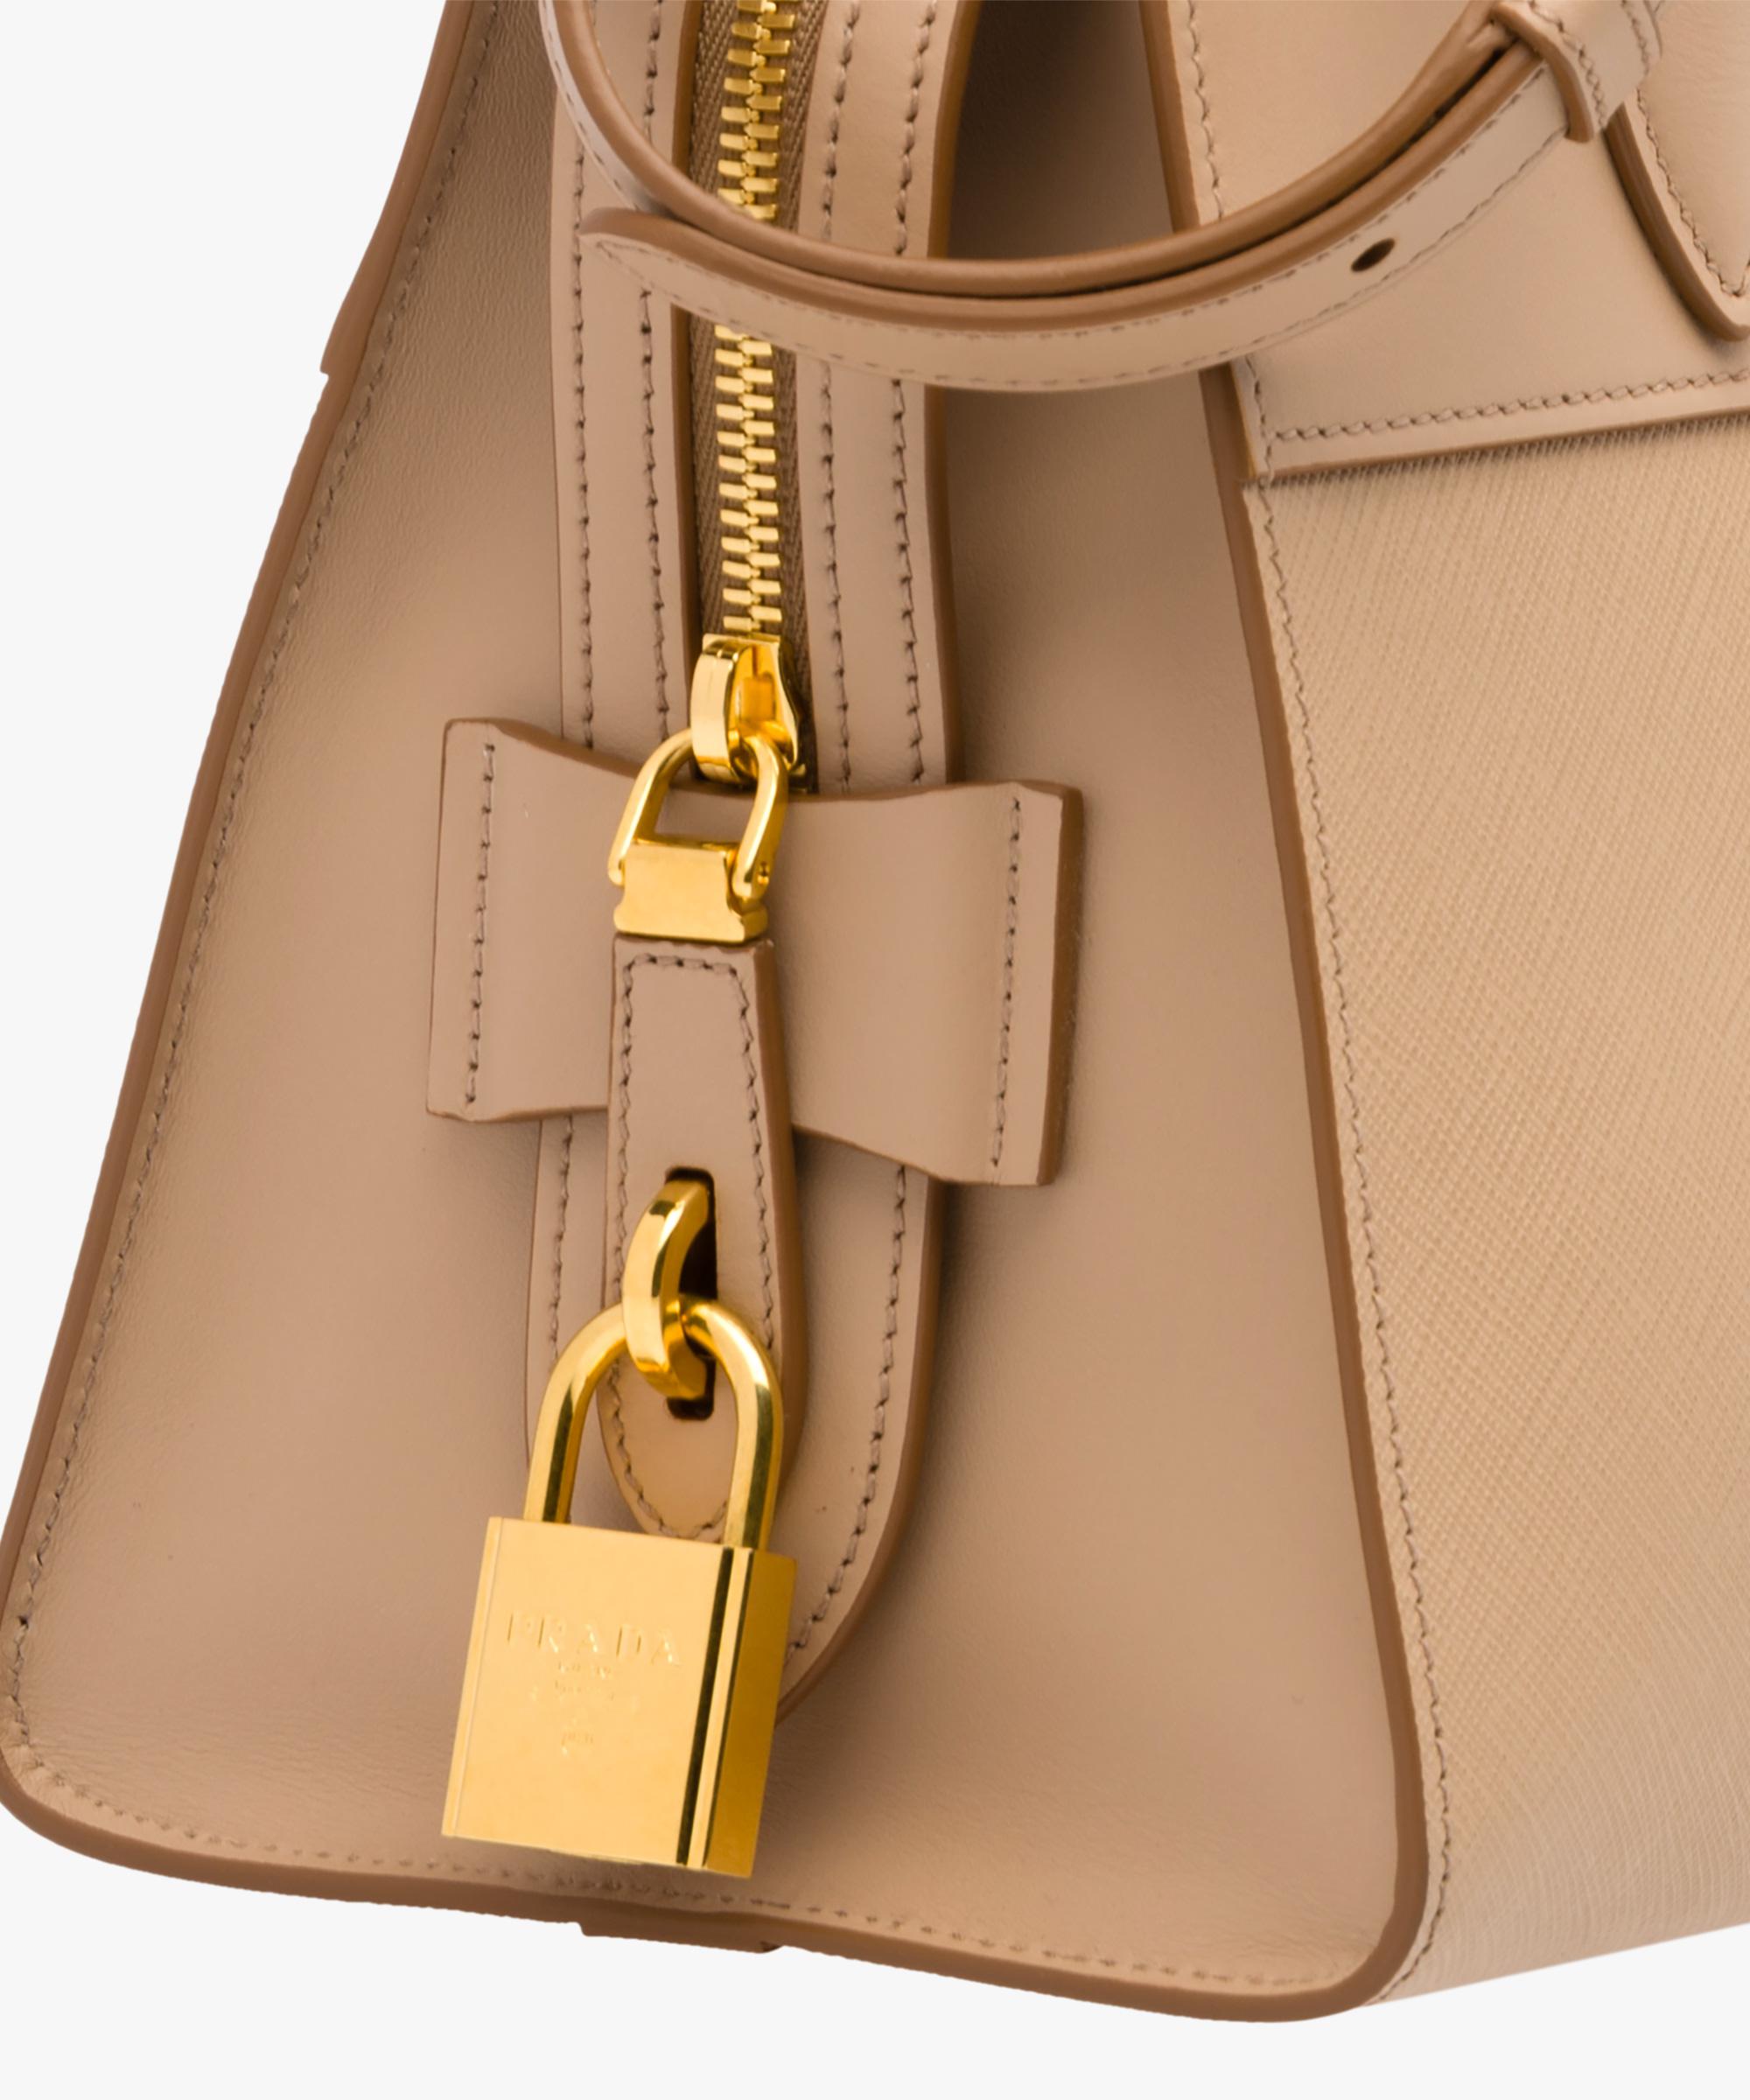 Esplanade leather handbag Prada White in Leather - 9016531